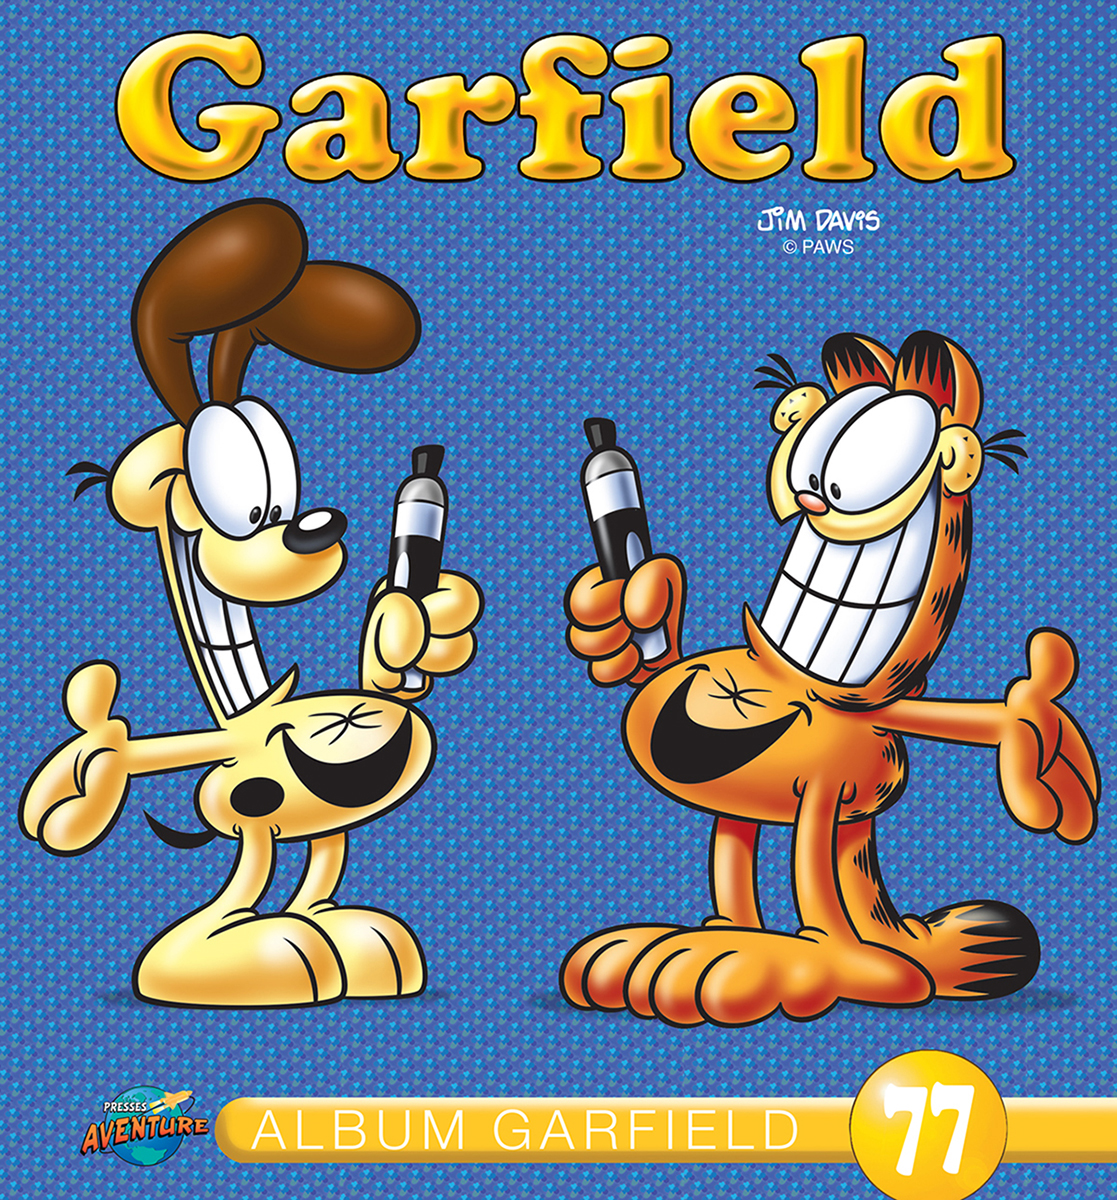  Album Garfield No 77 